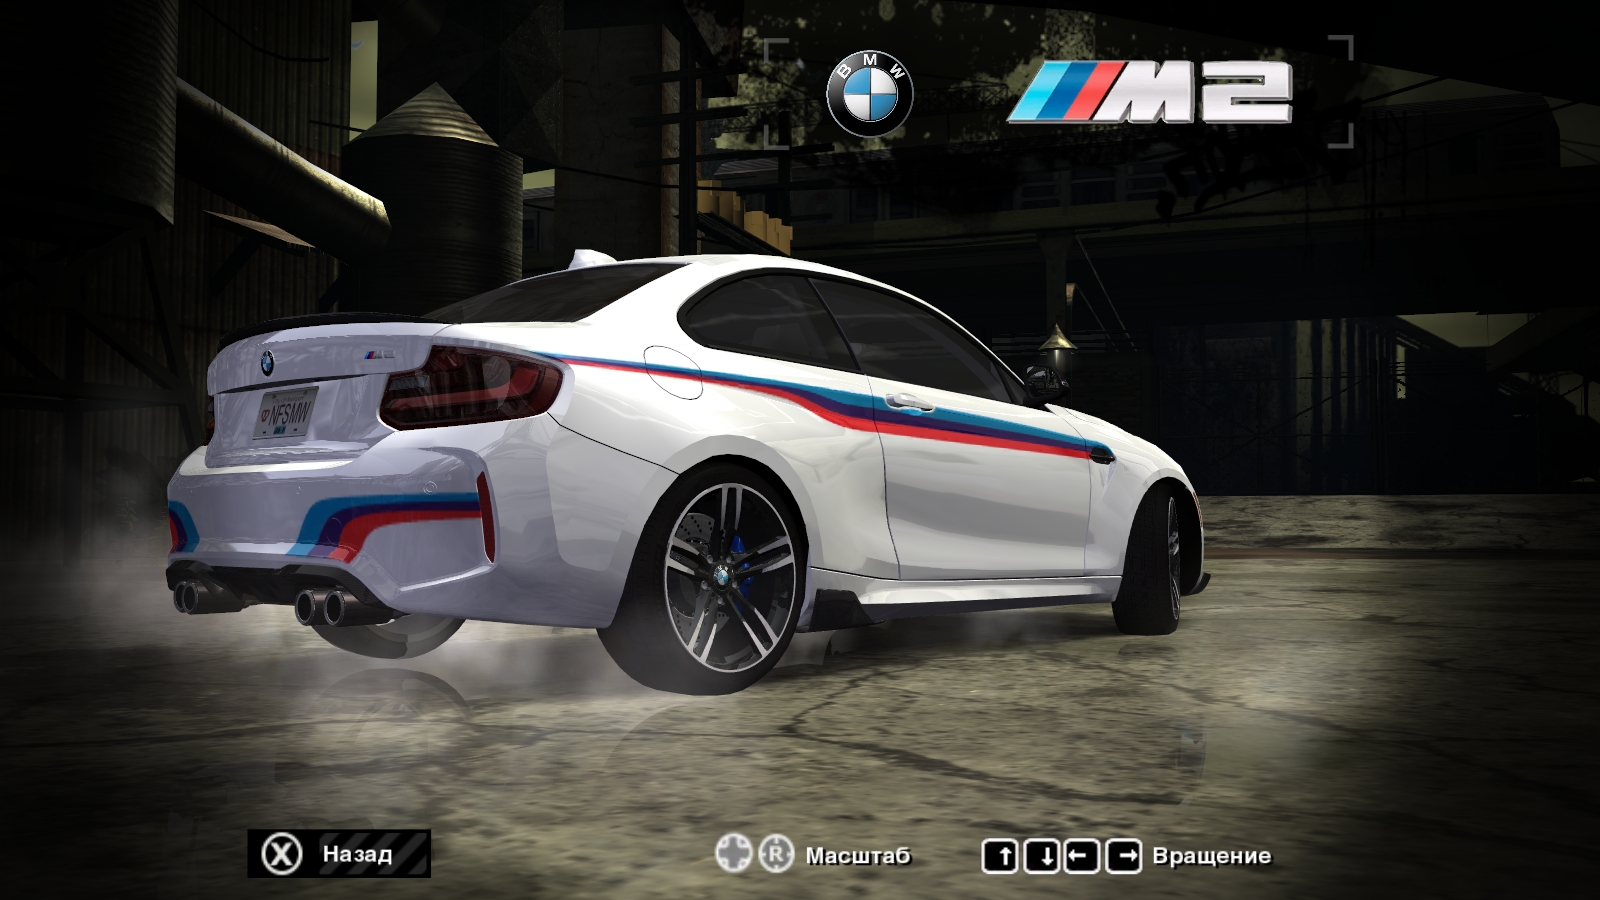 BMW M2 "M performance" livery